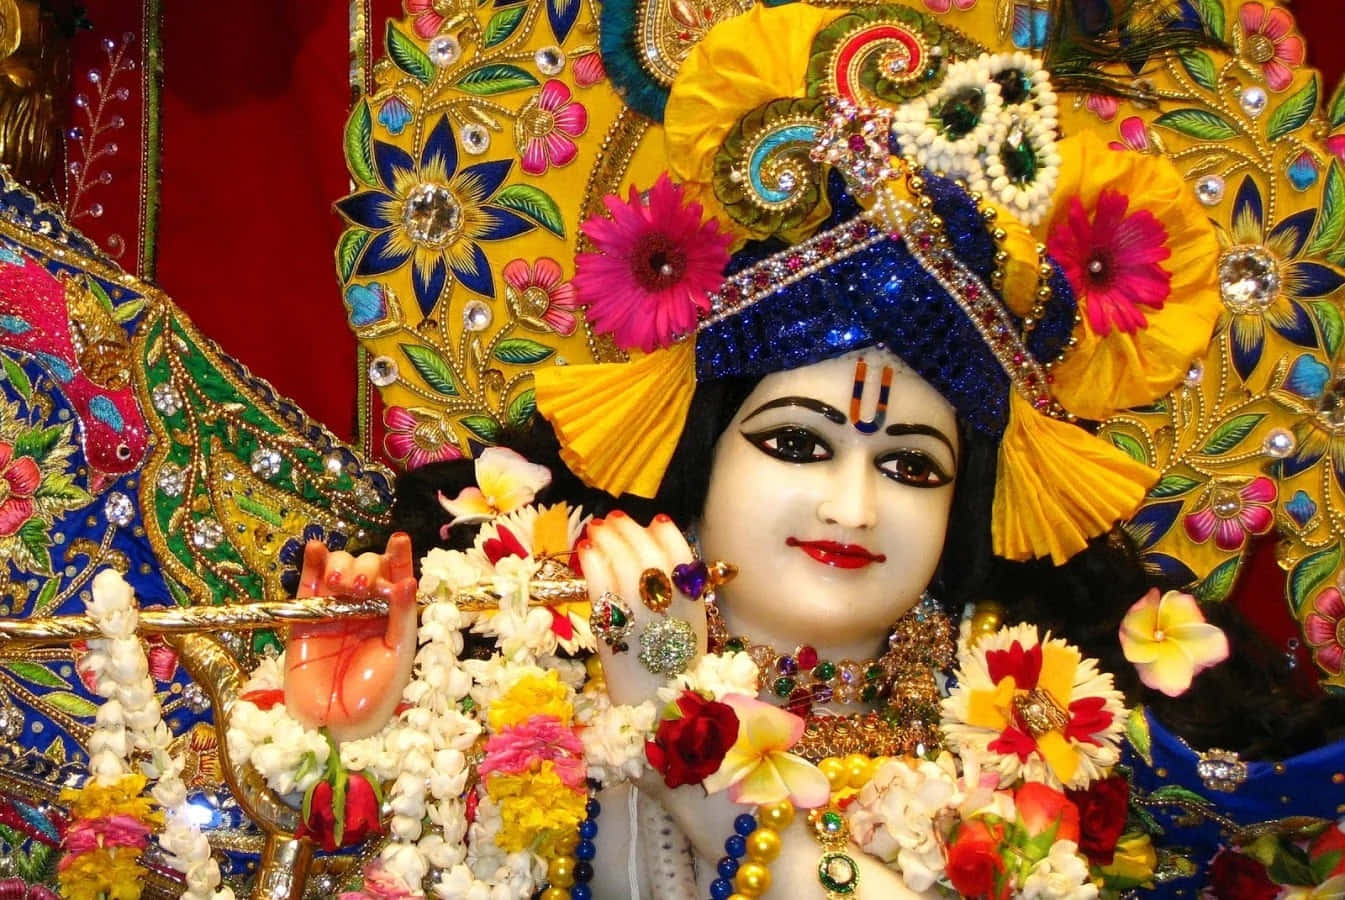 Majestic Krishna, the eighth Avatar of Vishnu